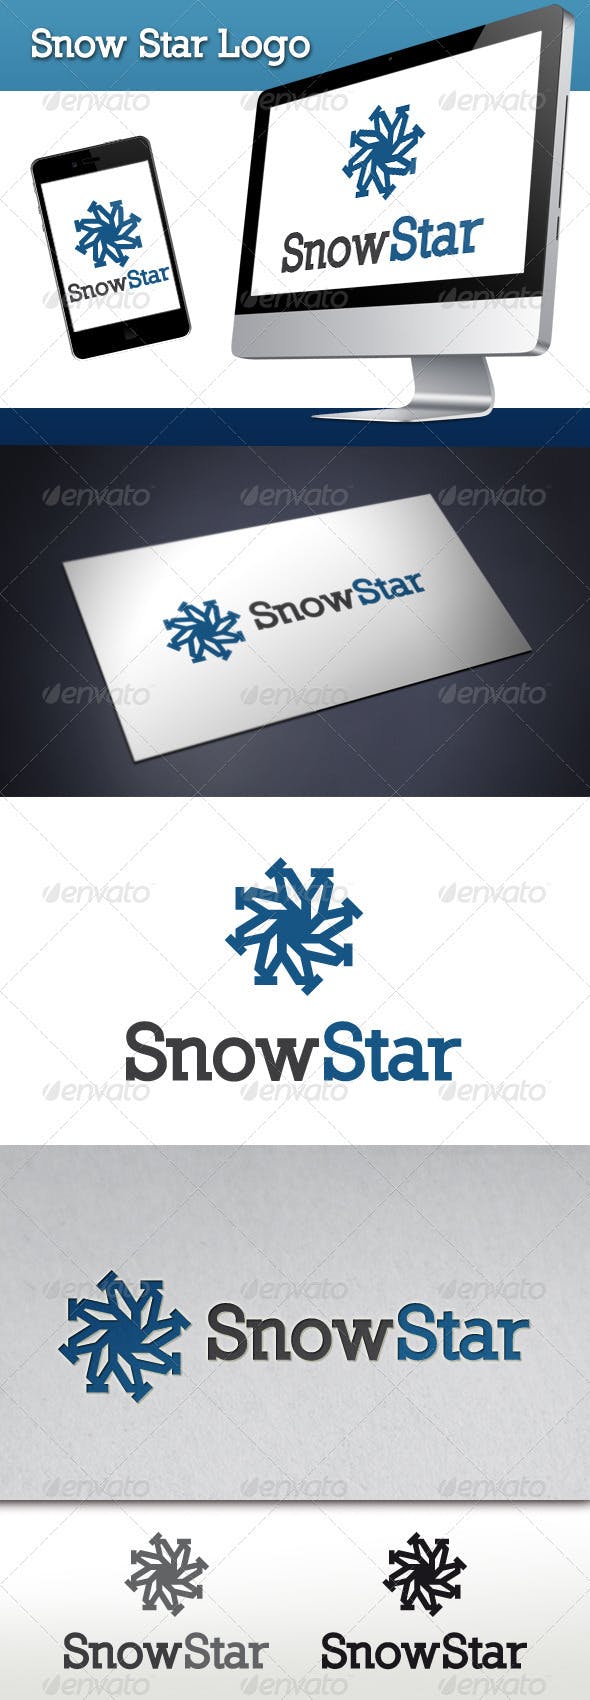 Snow Star Logo - Snow Star Logo Template